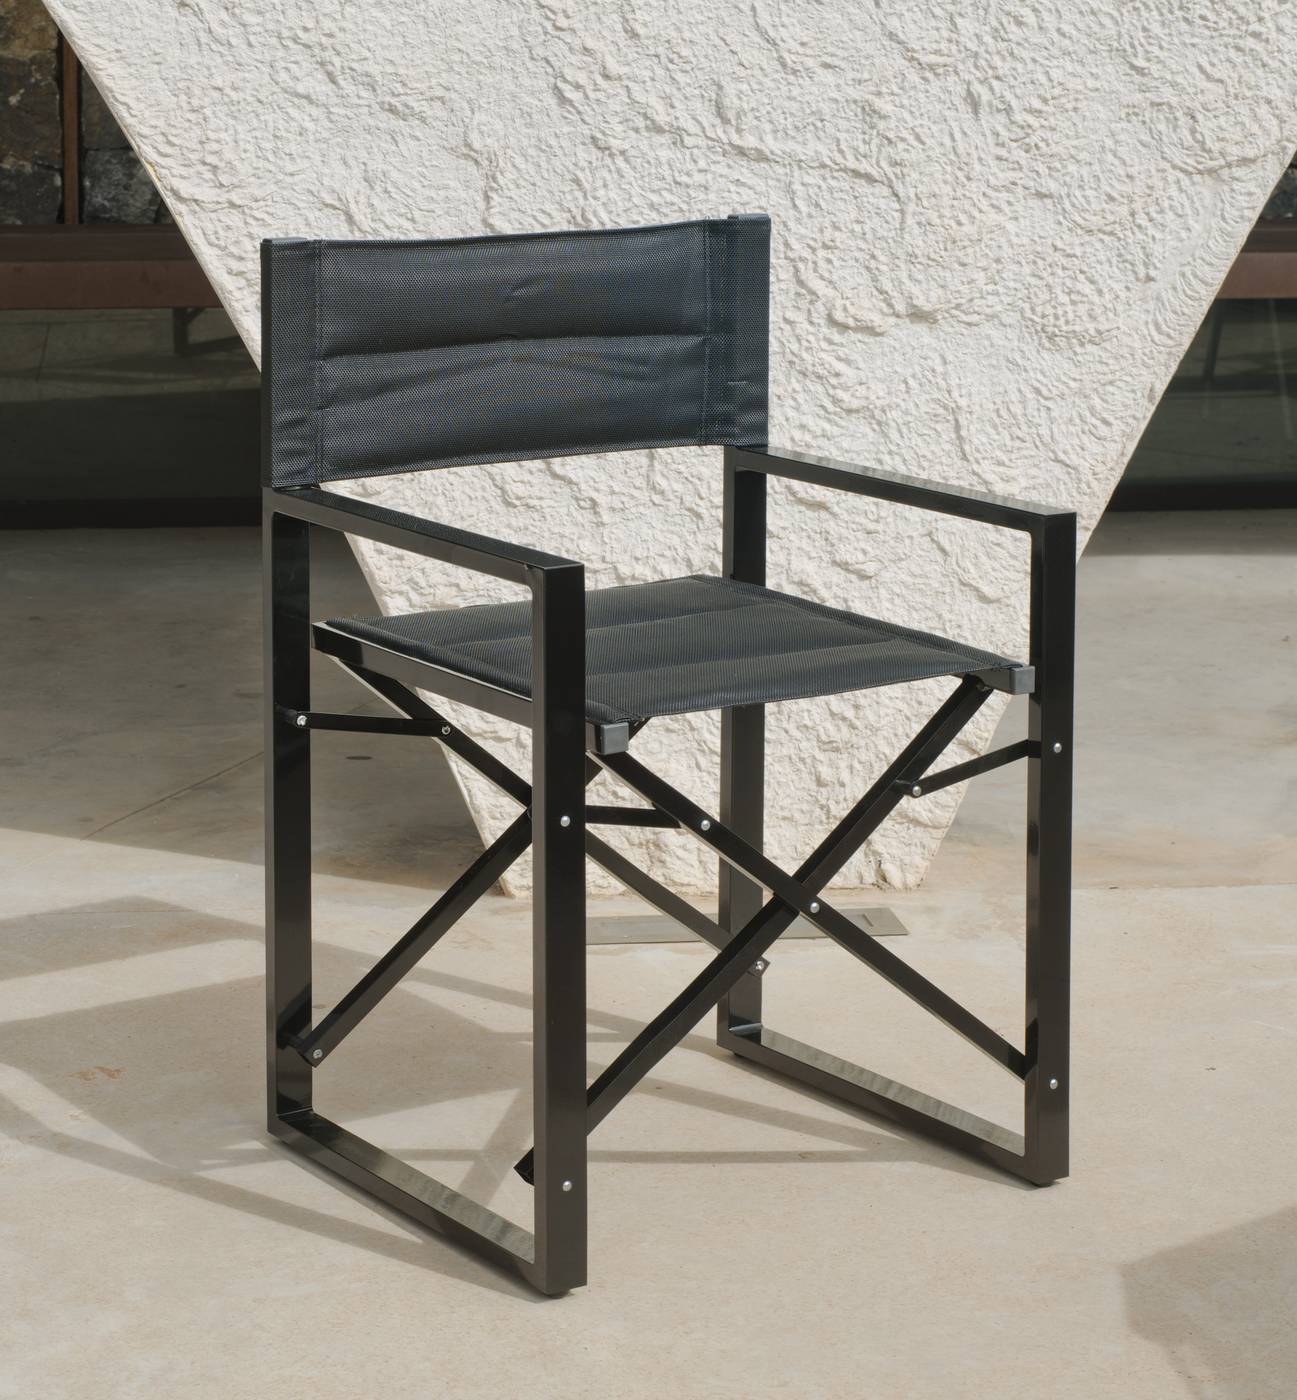 Set Aluminio Palma-Sinara 90-4 - Conjunto aluminio luxe: Mesa cuadrada 90 cm + 4 sillones plegables. Disponible en color blanco o antracita.